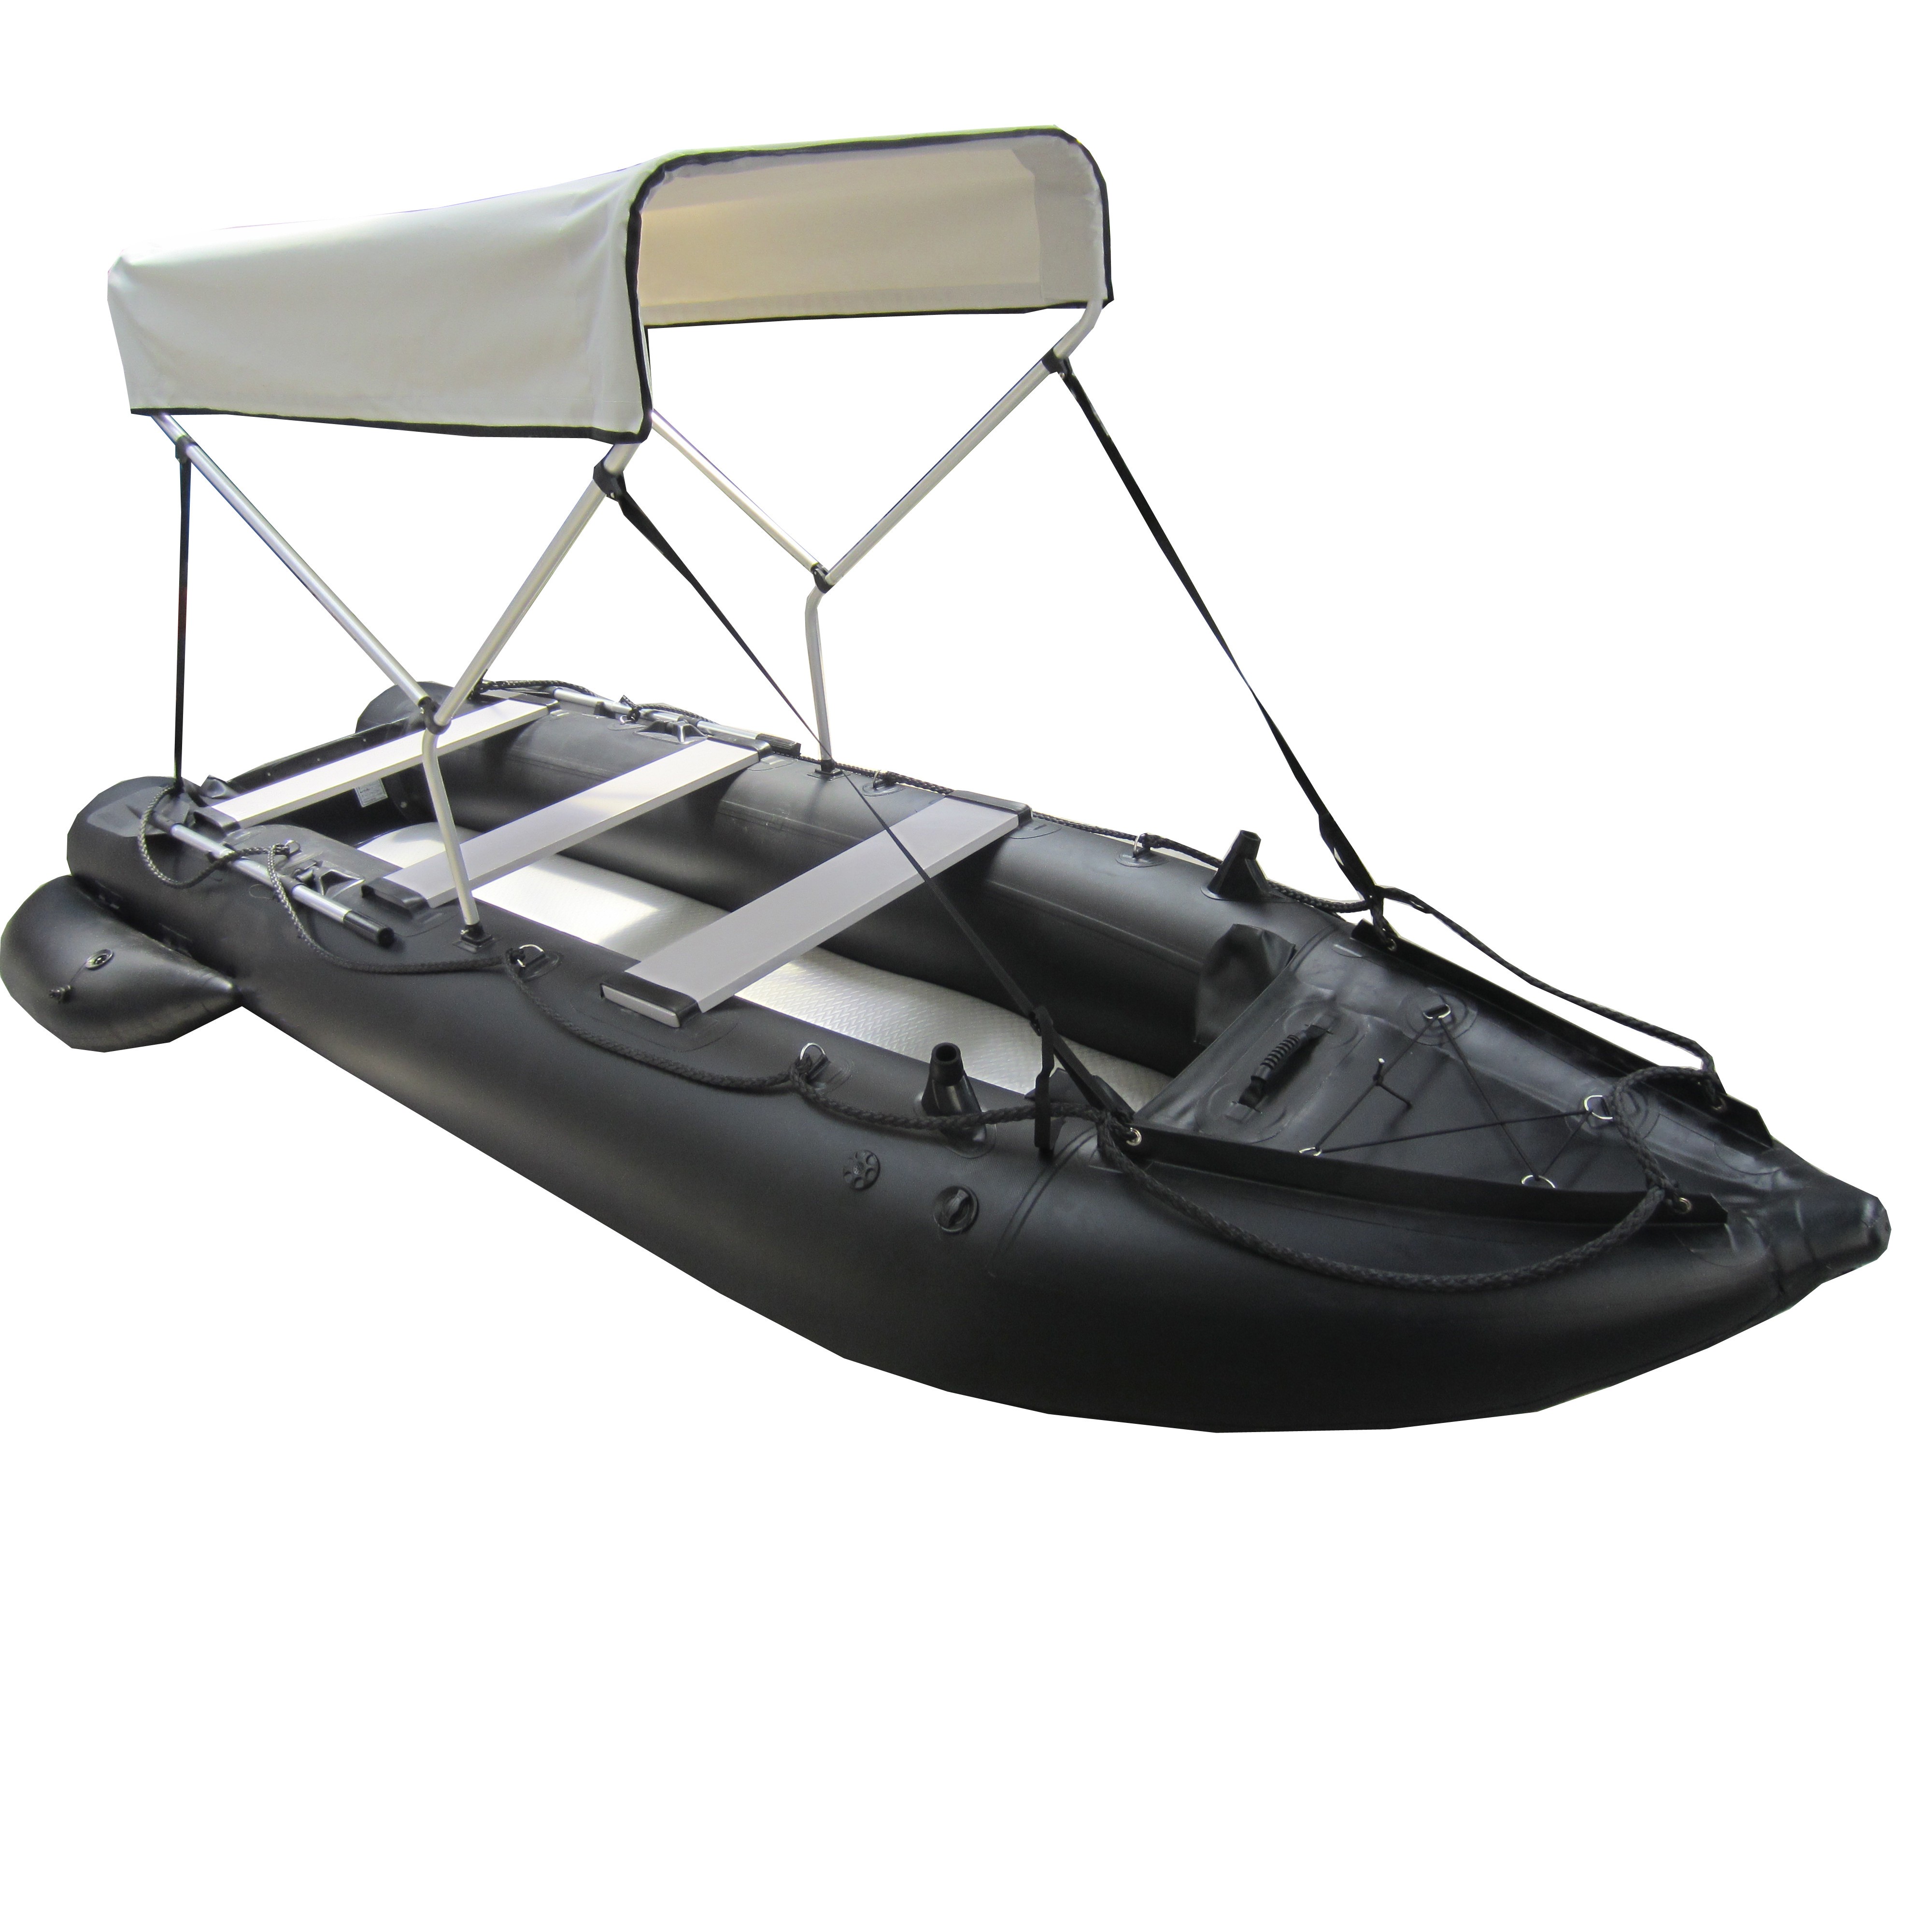 OEM/ODM Inflatable fishing kayak and river rubber kayak  Suppliers,Inflatable fishing kayak and river rubber kayak Factory